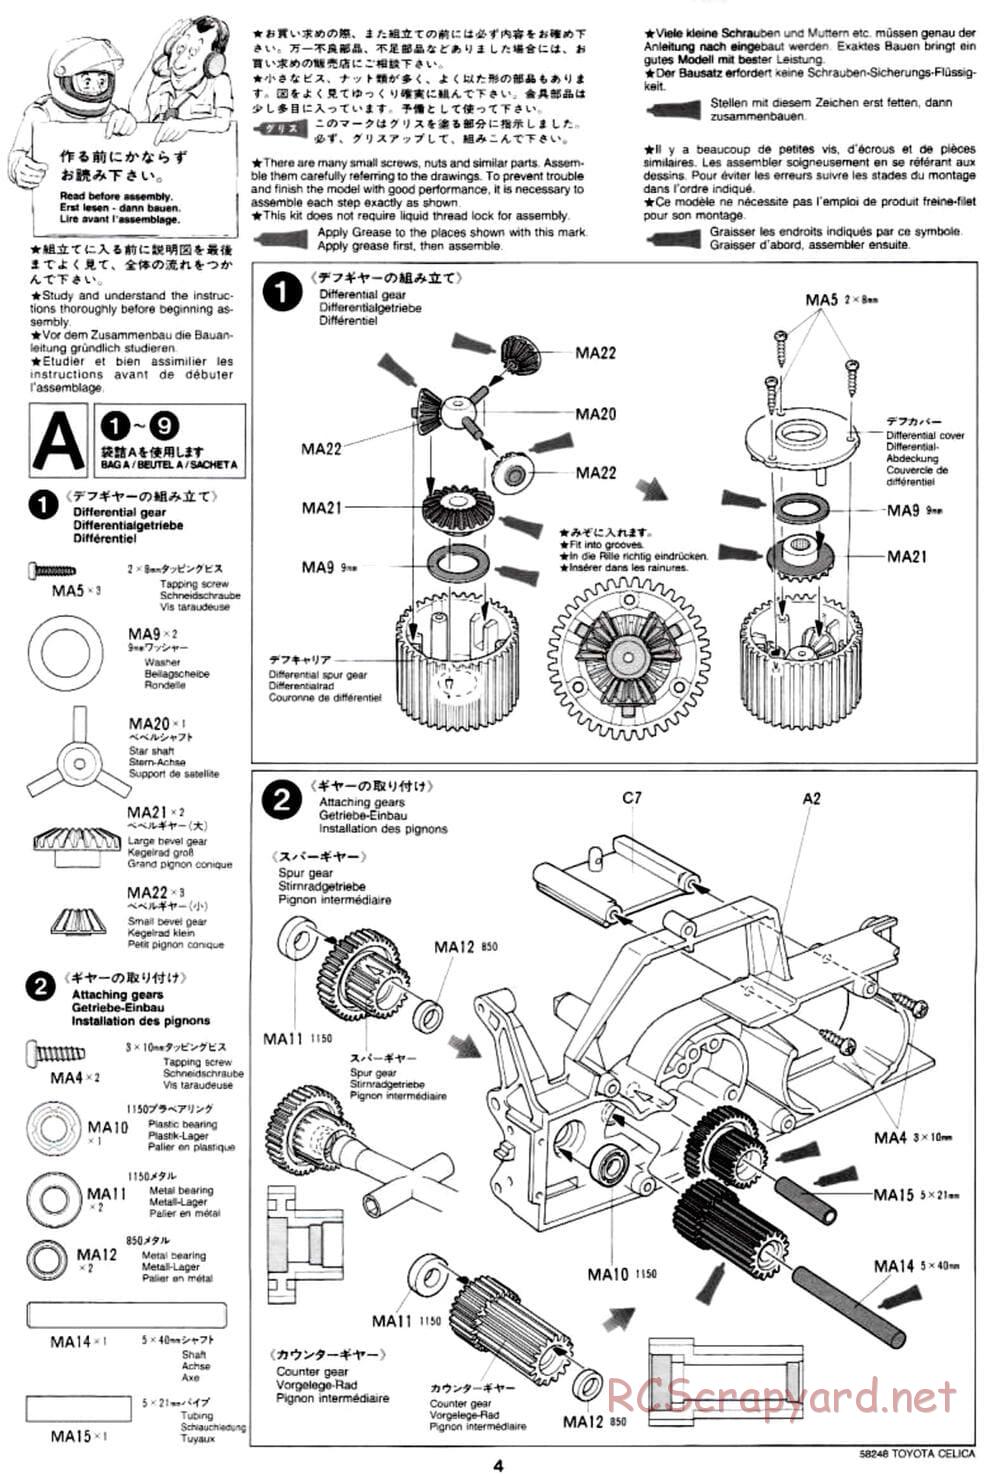 Tamiya - Toyota Celica - FF-02 Chassis - Manual - Page 4